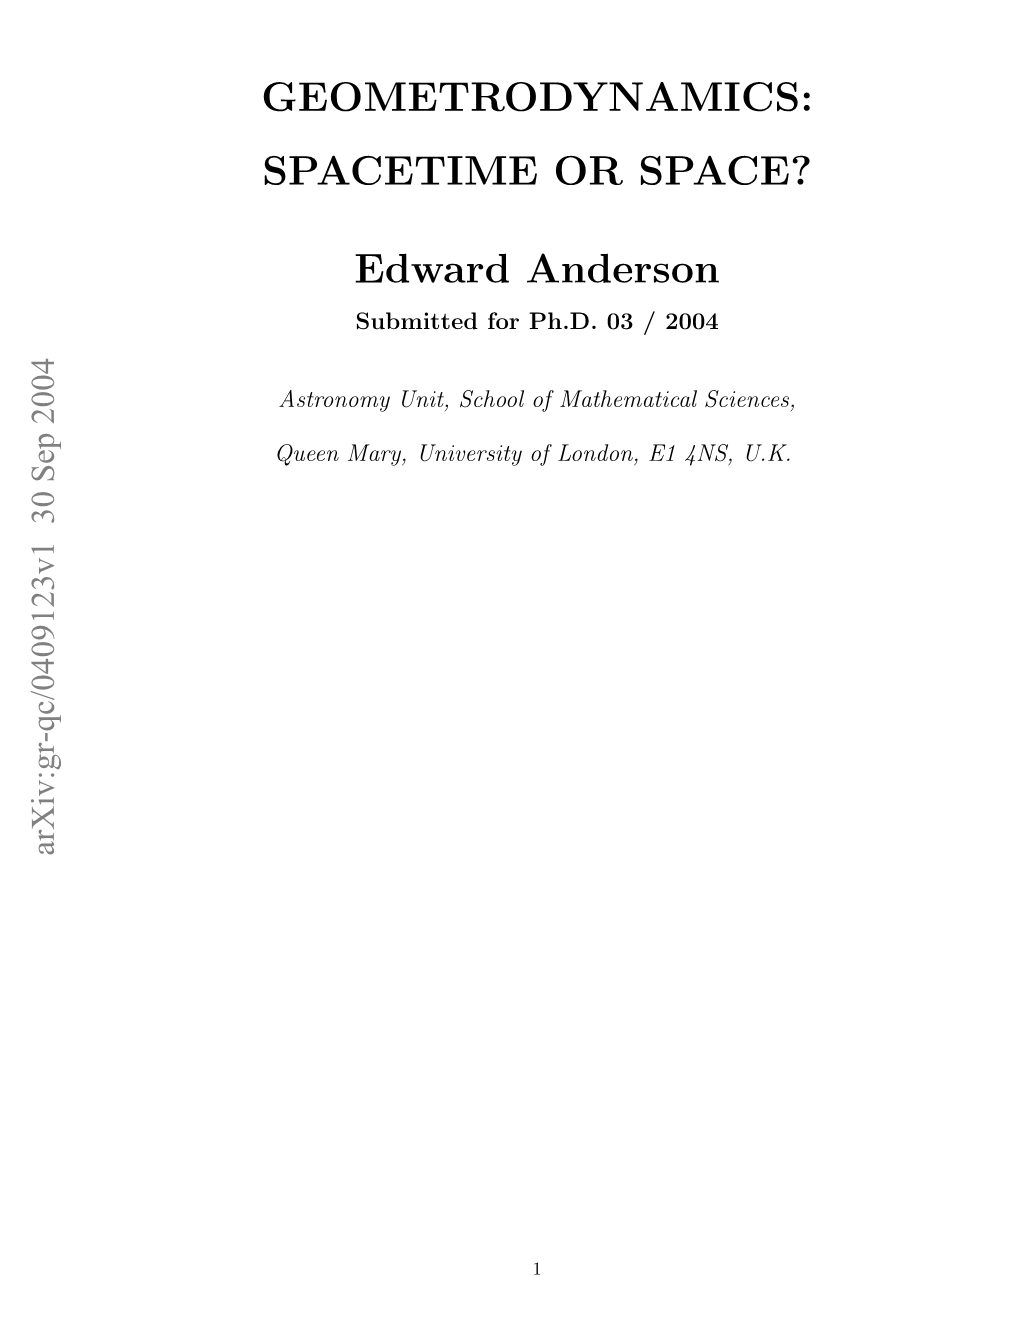 GEOMETRODYNAMICS: SPACETIME OR SPACE? Edward Anderson